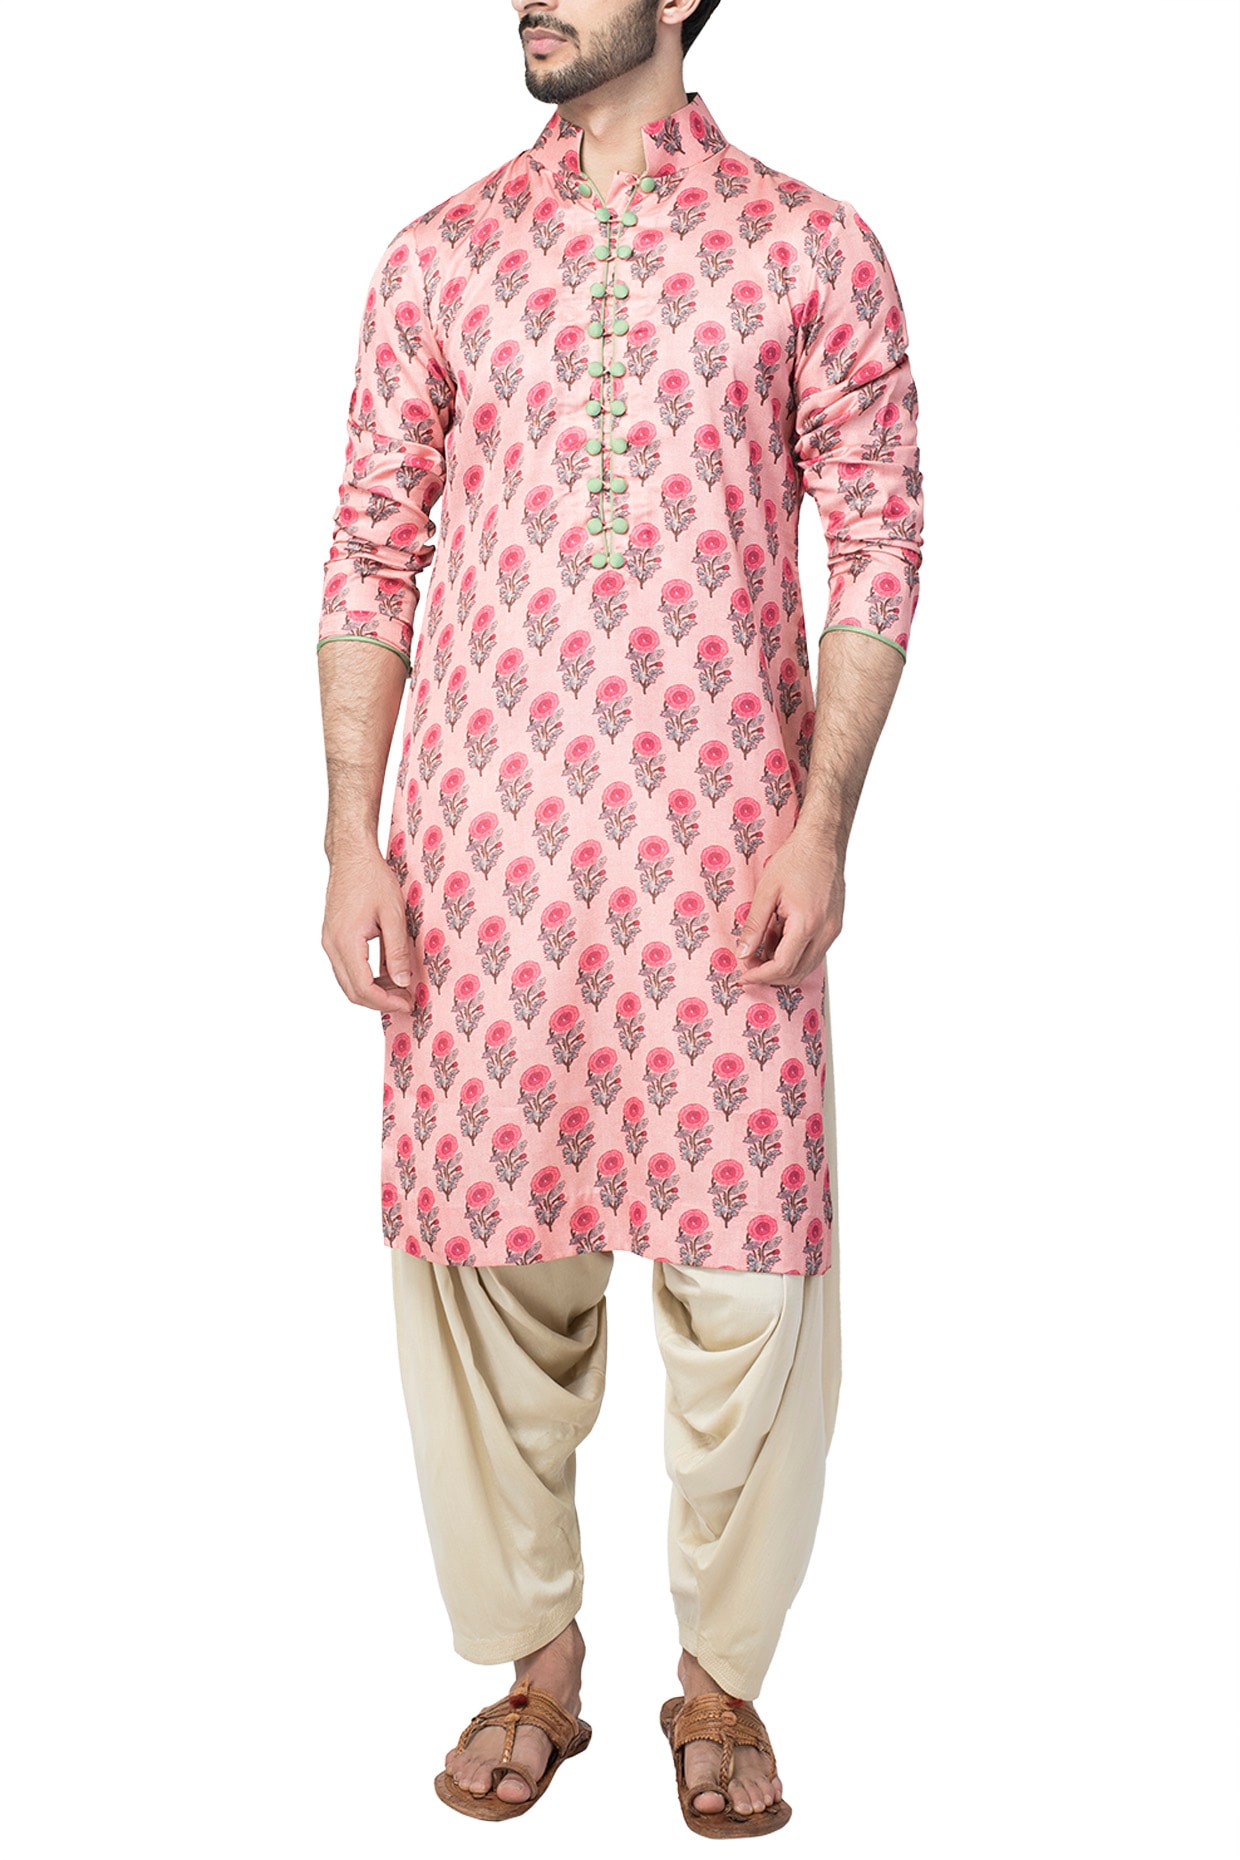 Floral Printed Cotton Punjabi Suit in Dark Pink  KHBZ1509